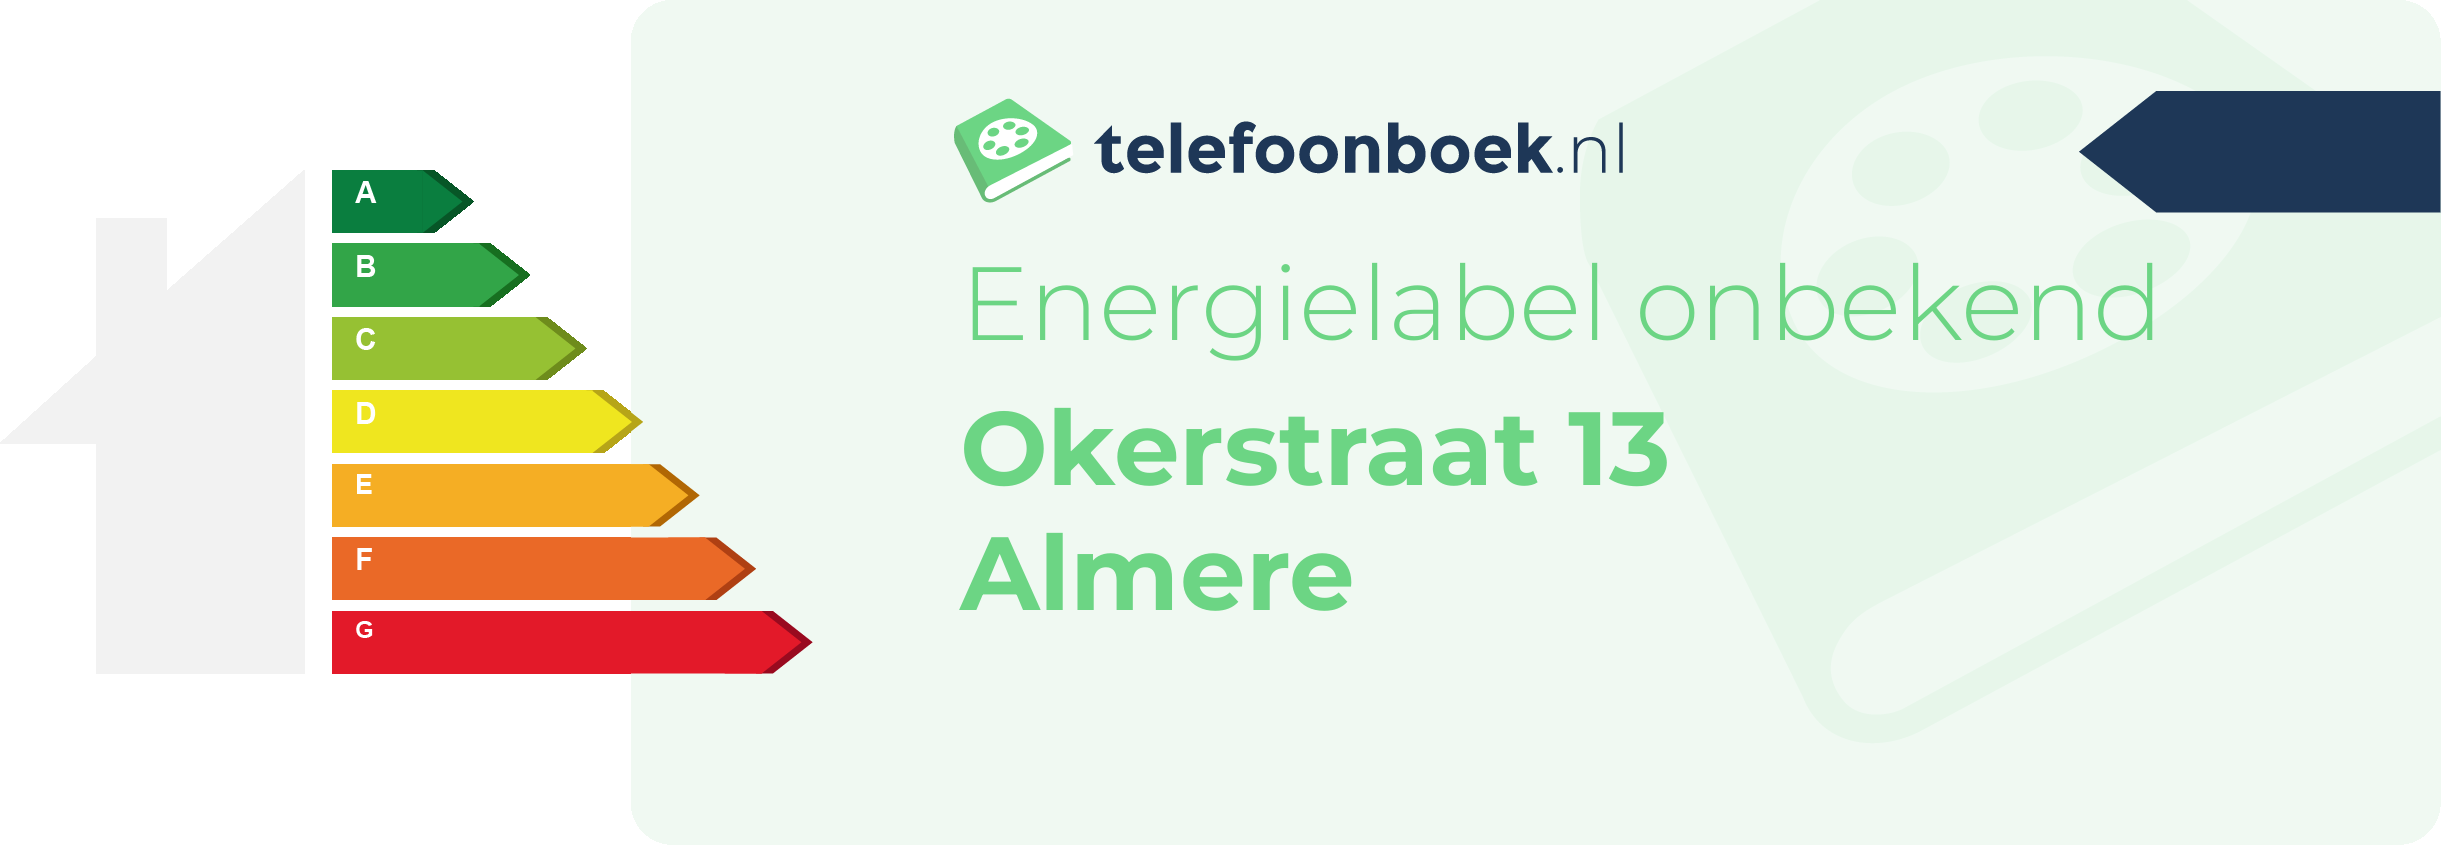 Energielabel Okerstraat 13 Almere